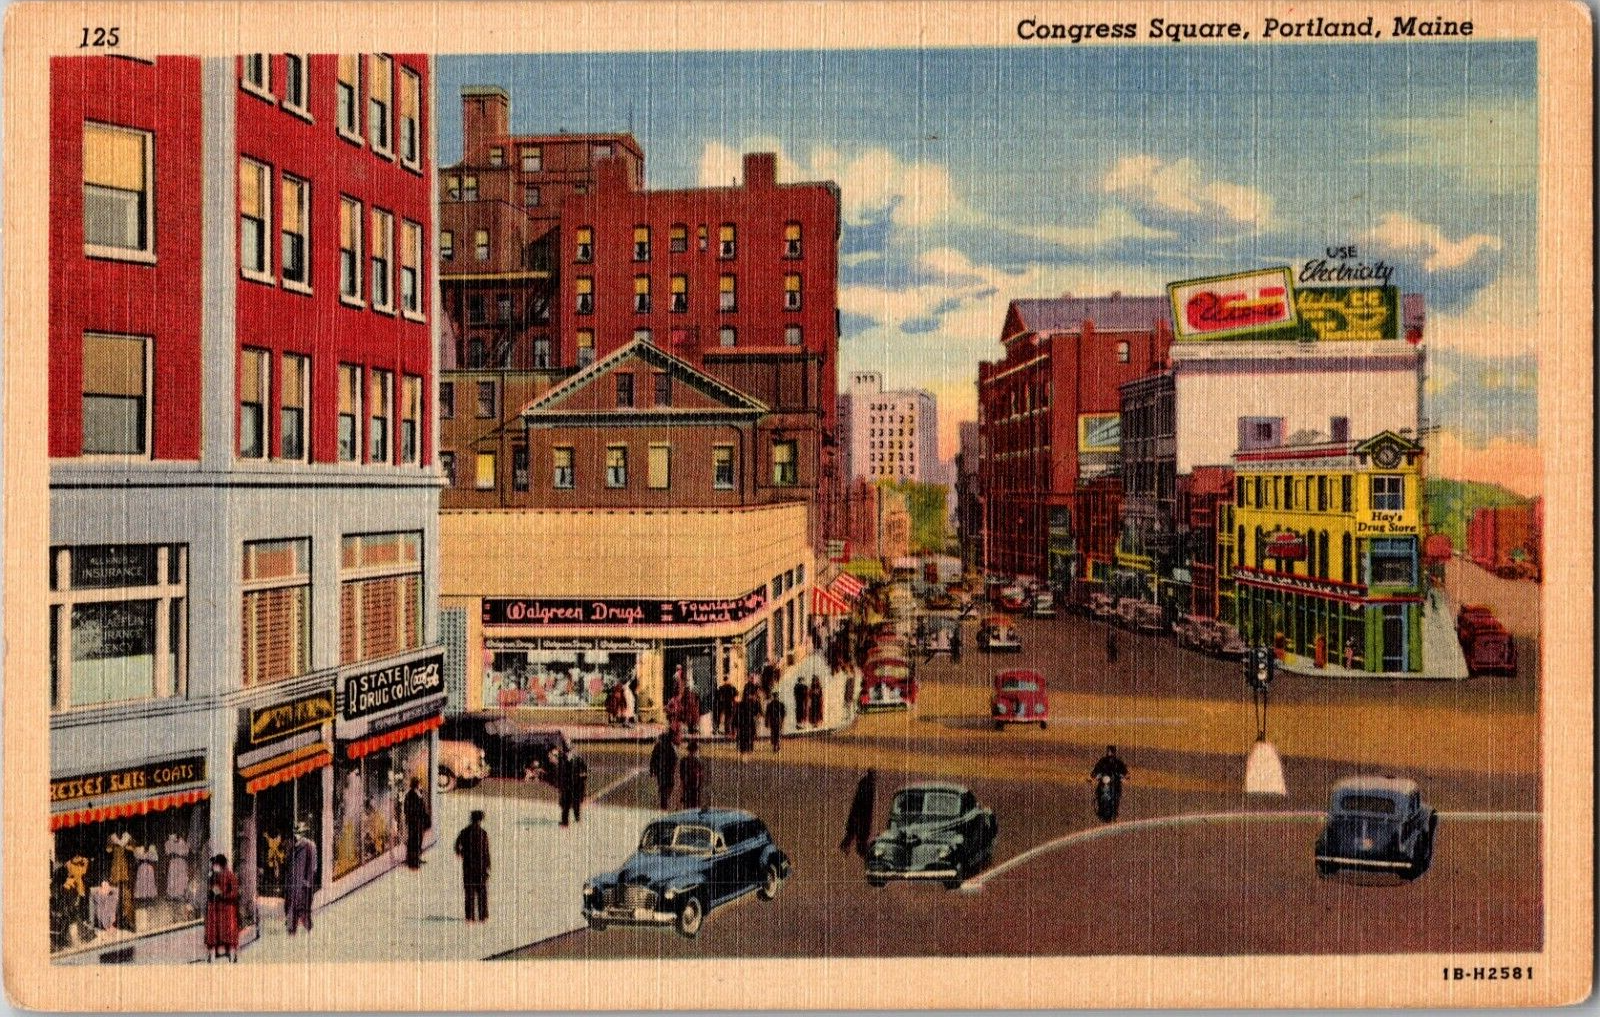 Primary image for Vtg Postcard Congress Square, Old Street Scene, Cars, Portland Maine